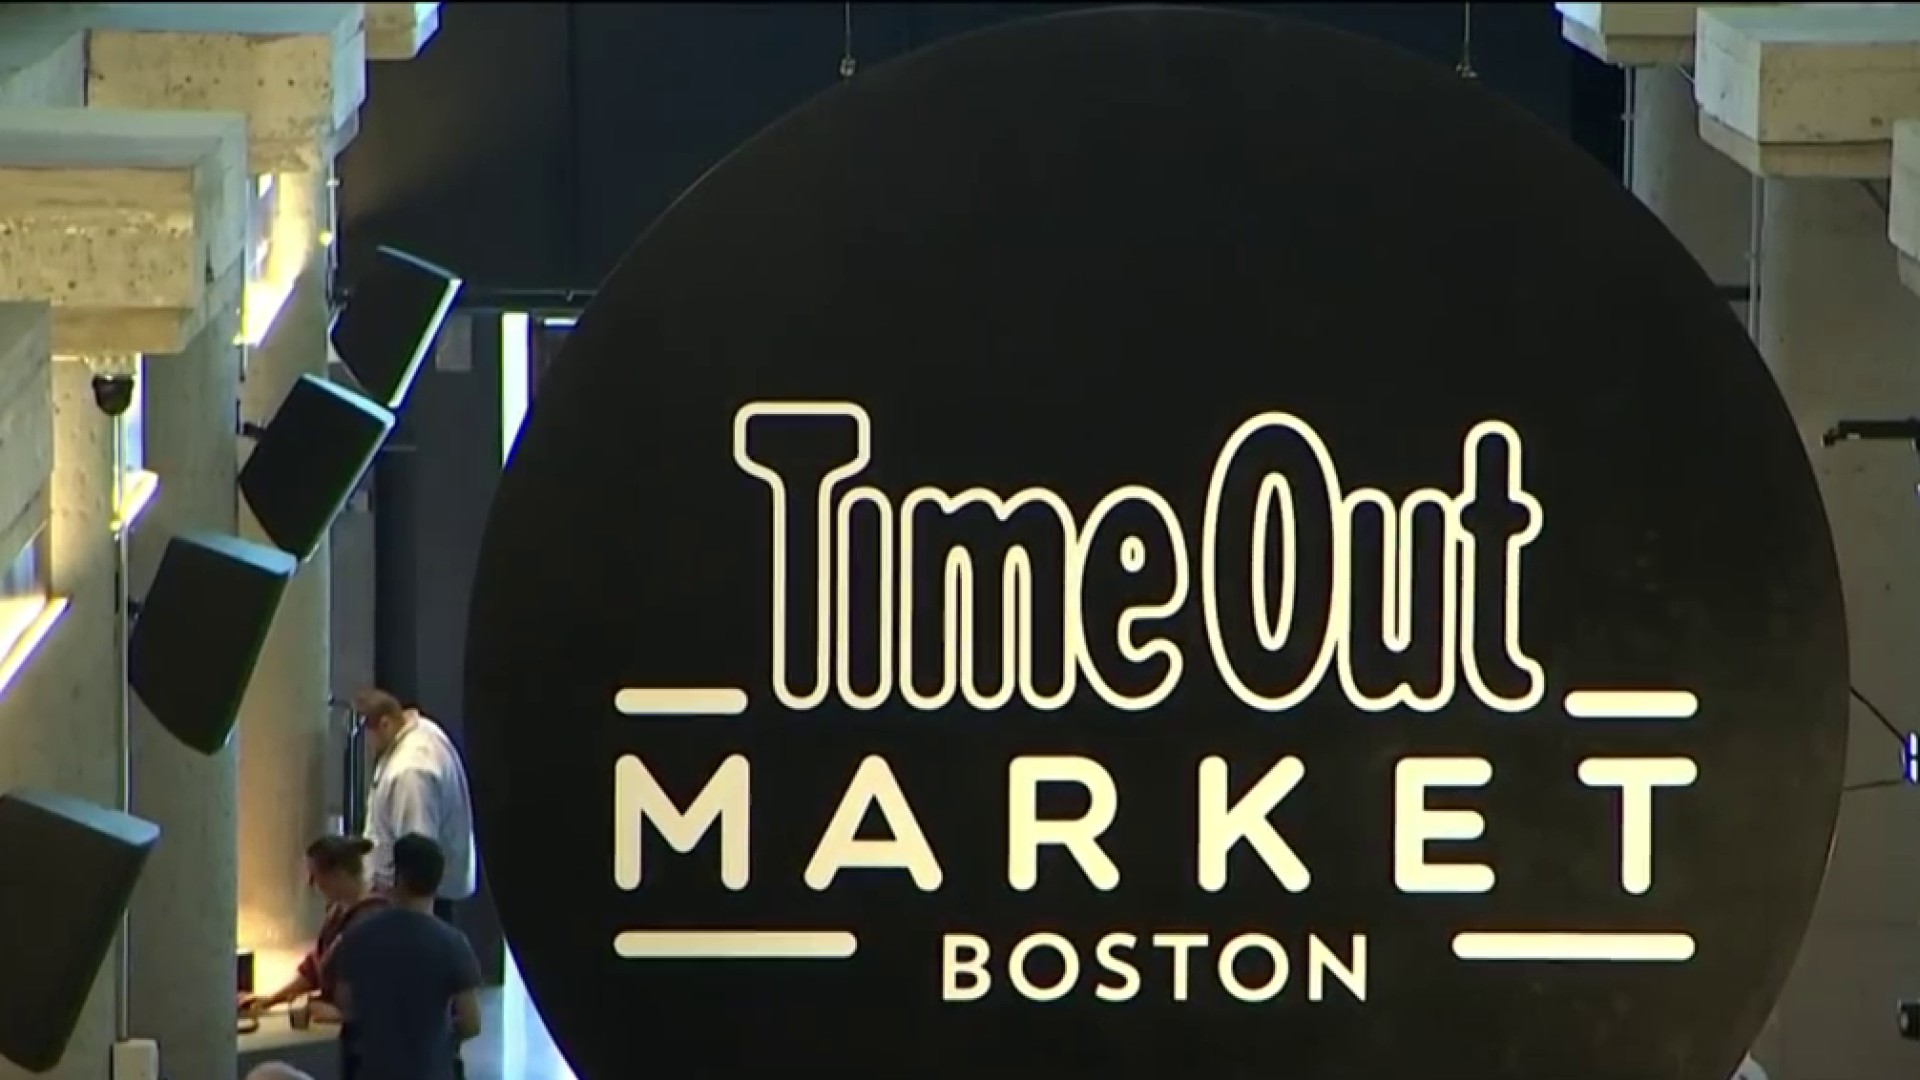 time out market boston instagram